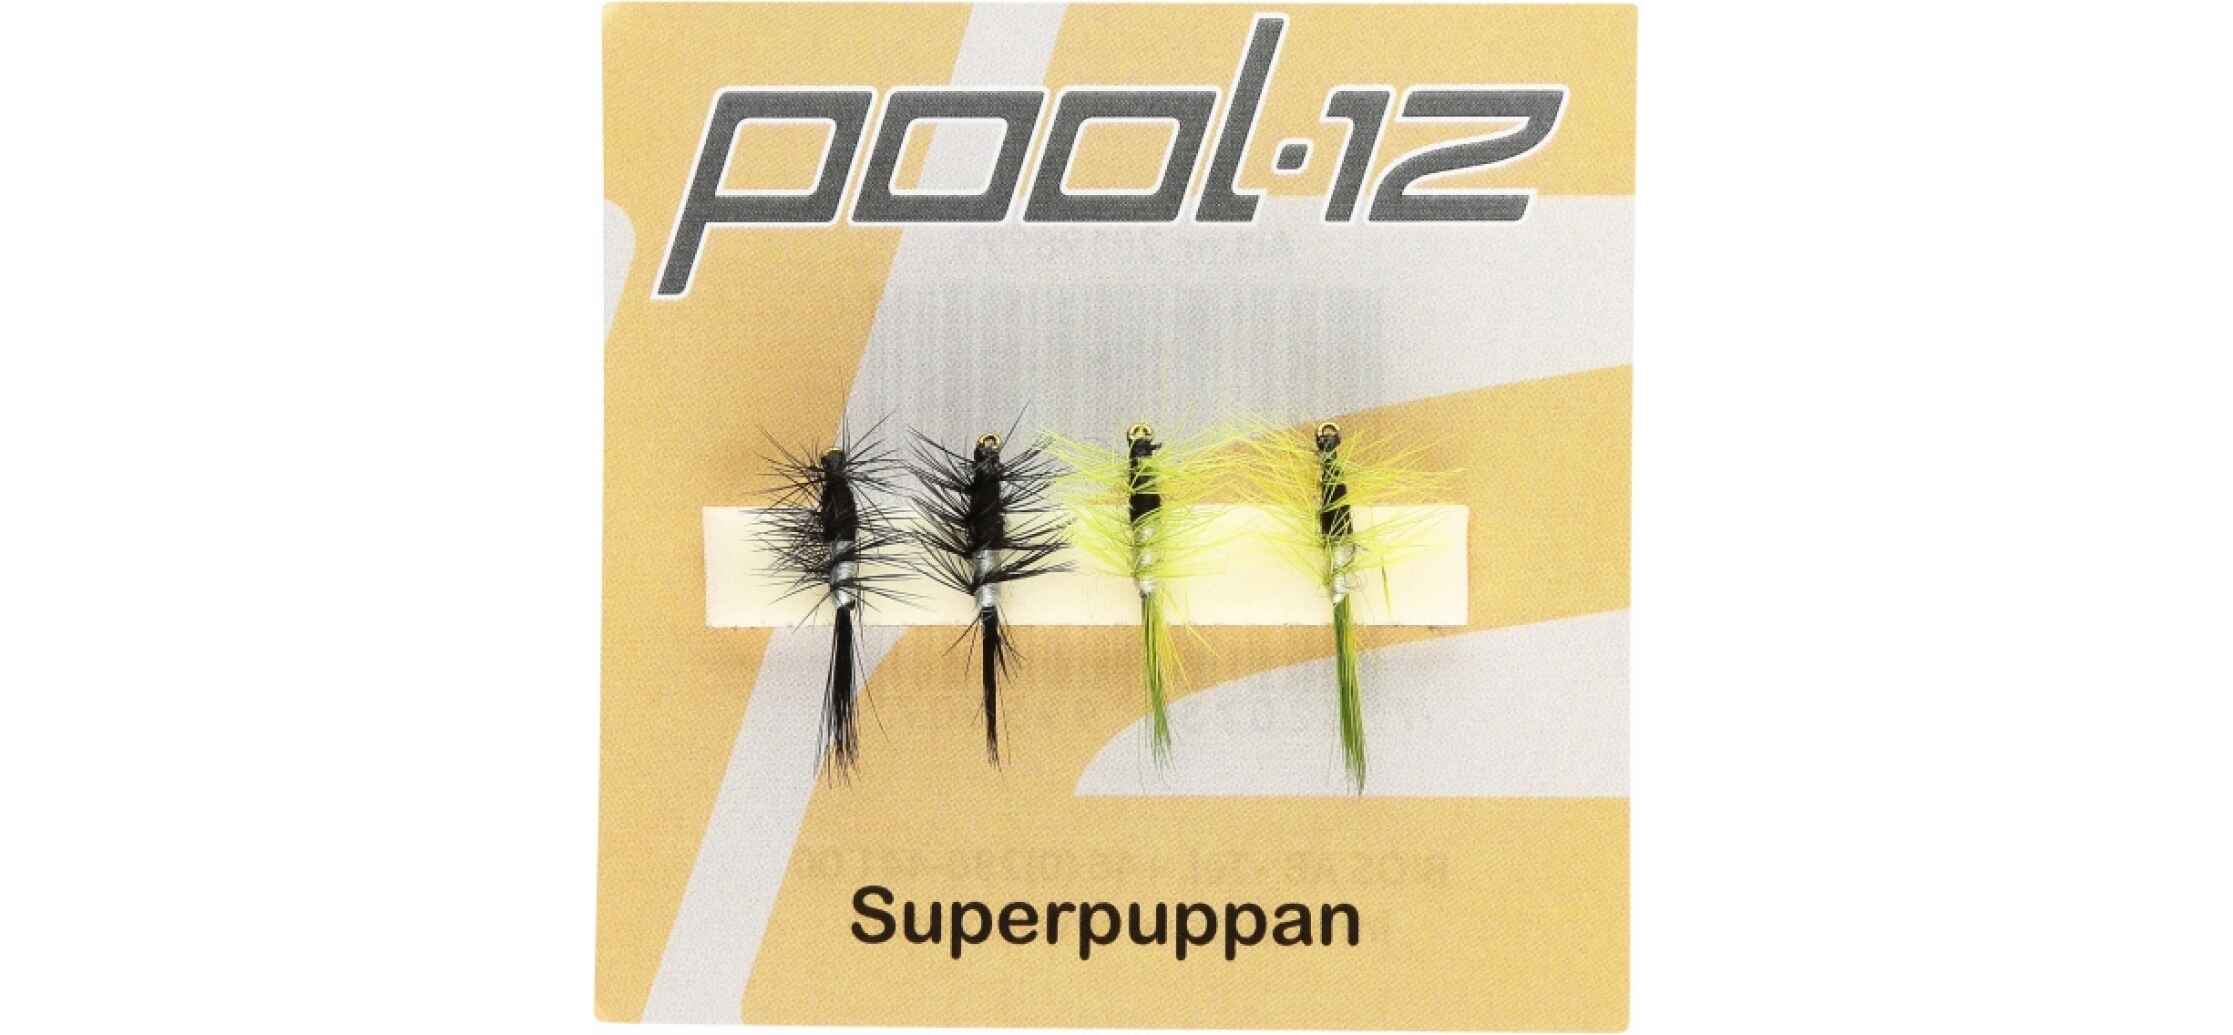 Pool 12 4-Pack Superpuppan